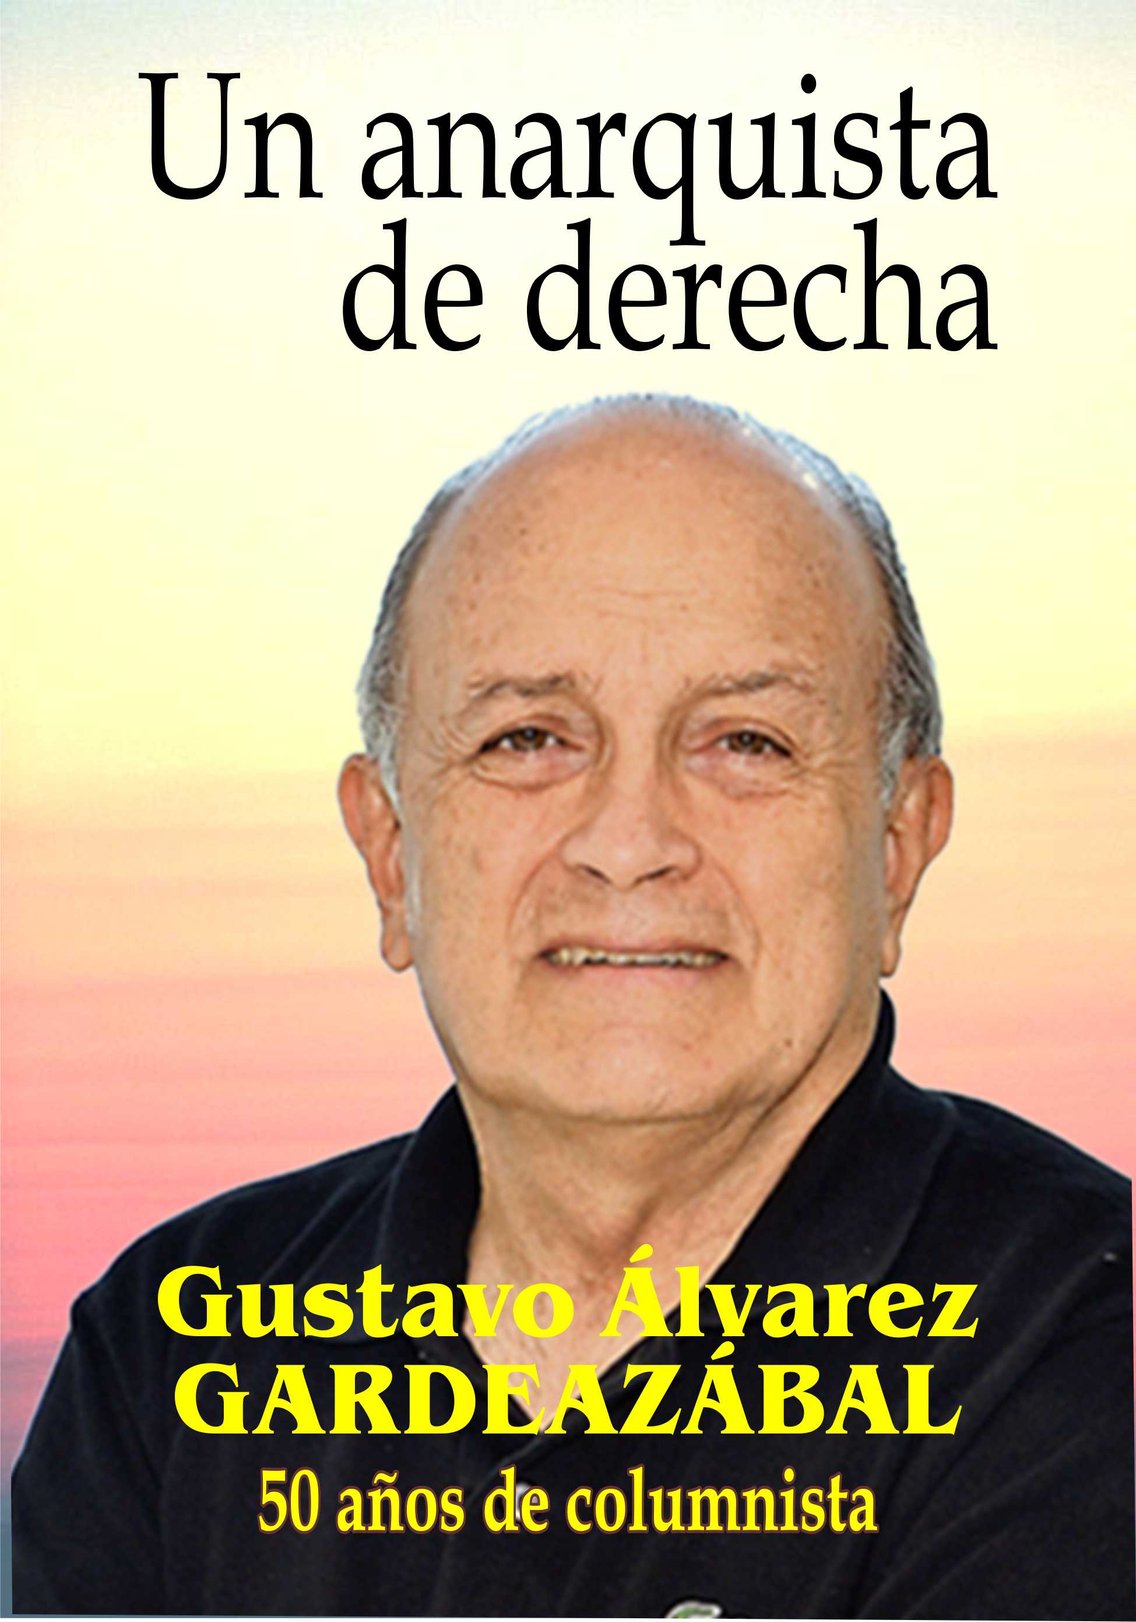 VARGAS LLOSA FRACASA MASACRANDO A GALDÓS,en qué está leyendo Gardeazábal,junio 18 2022 - Cover Image